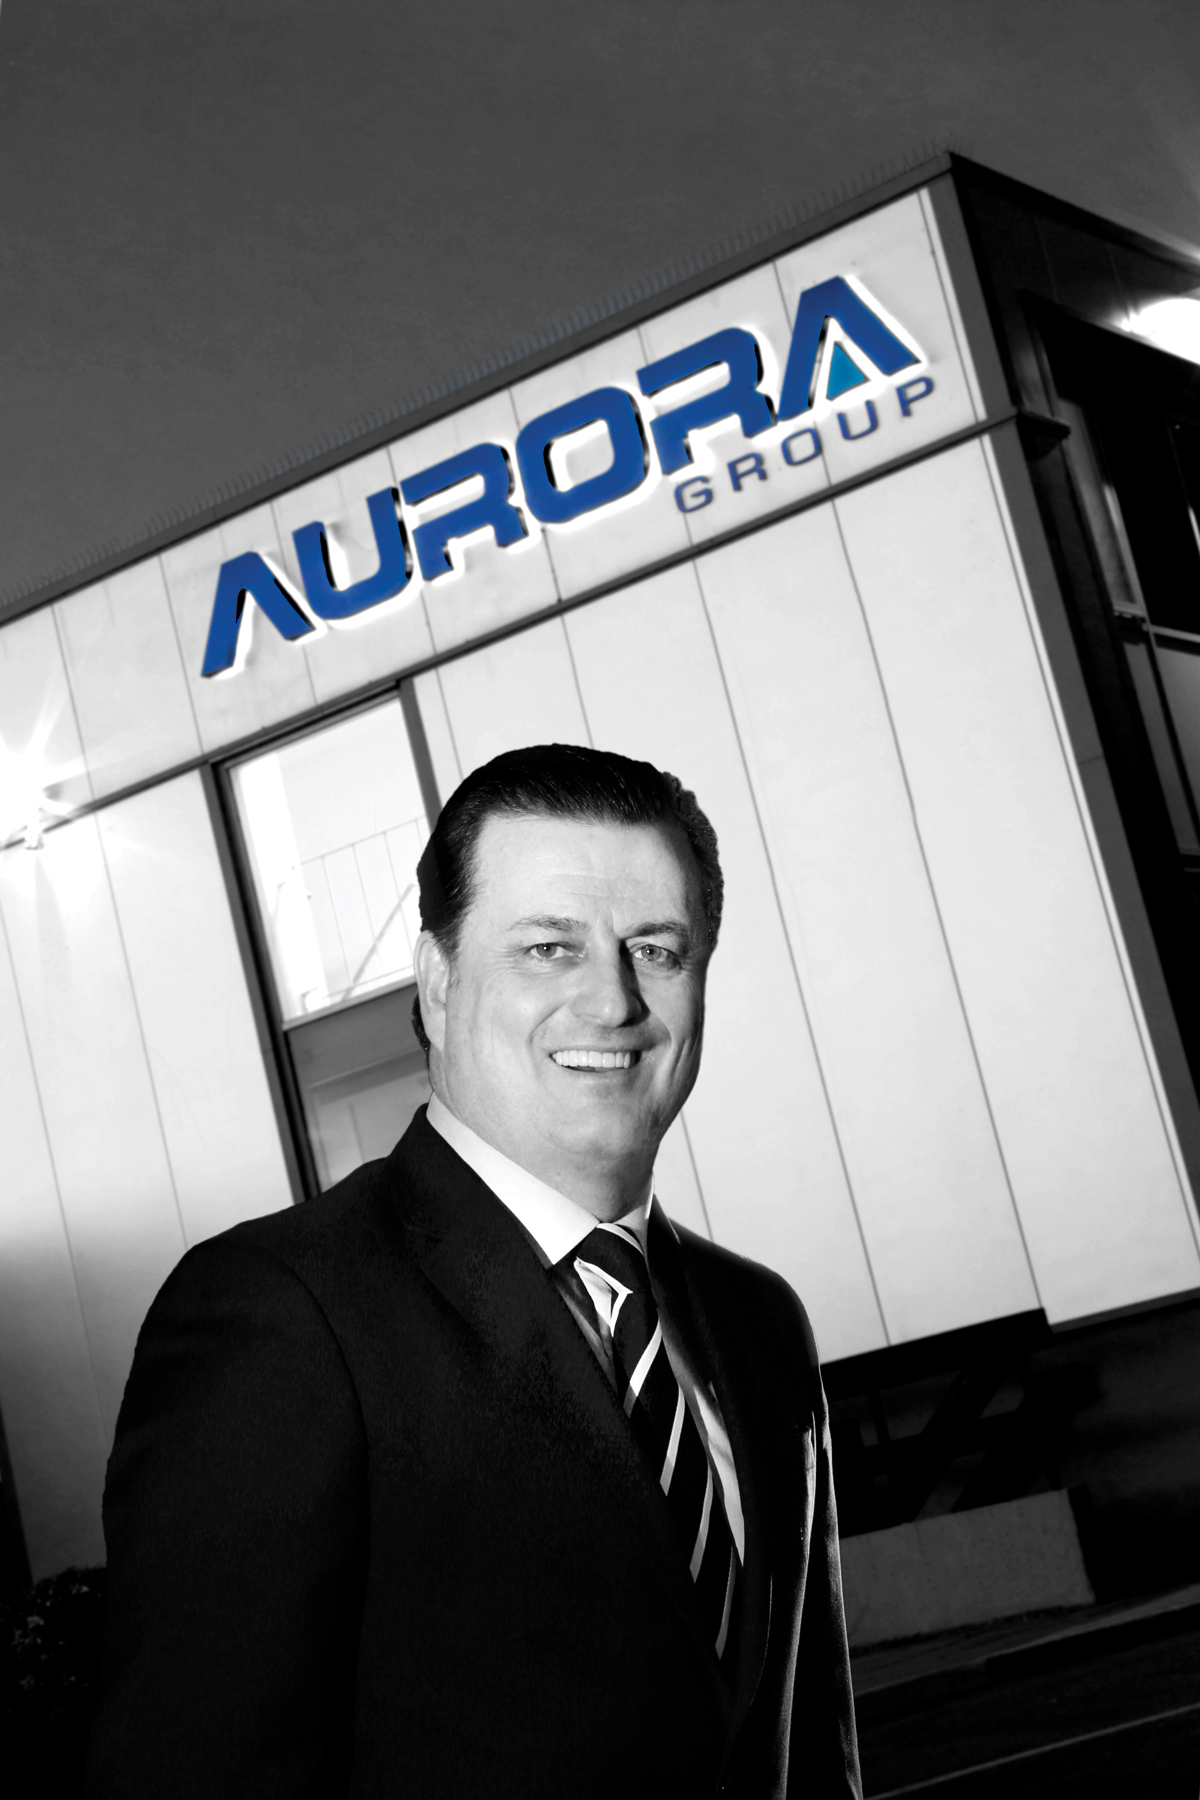 Andrew Johnson, CEO of Aurora